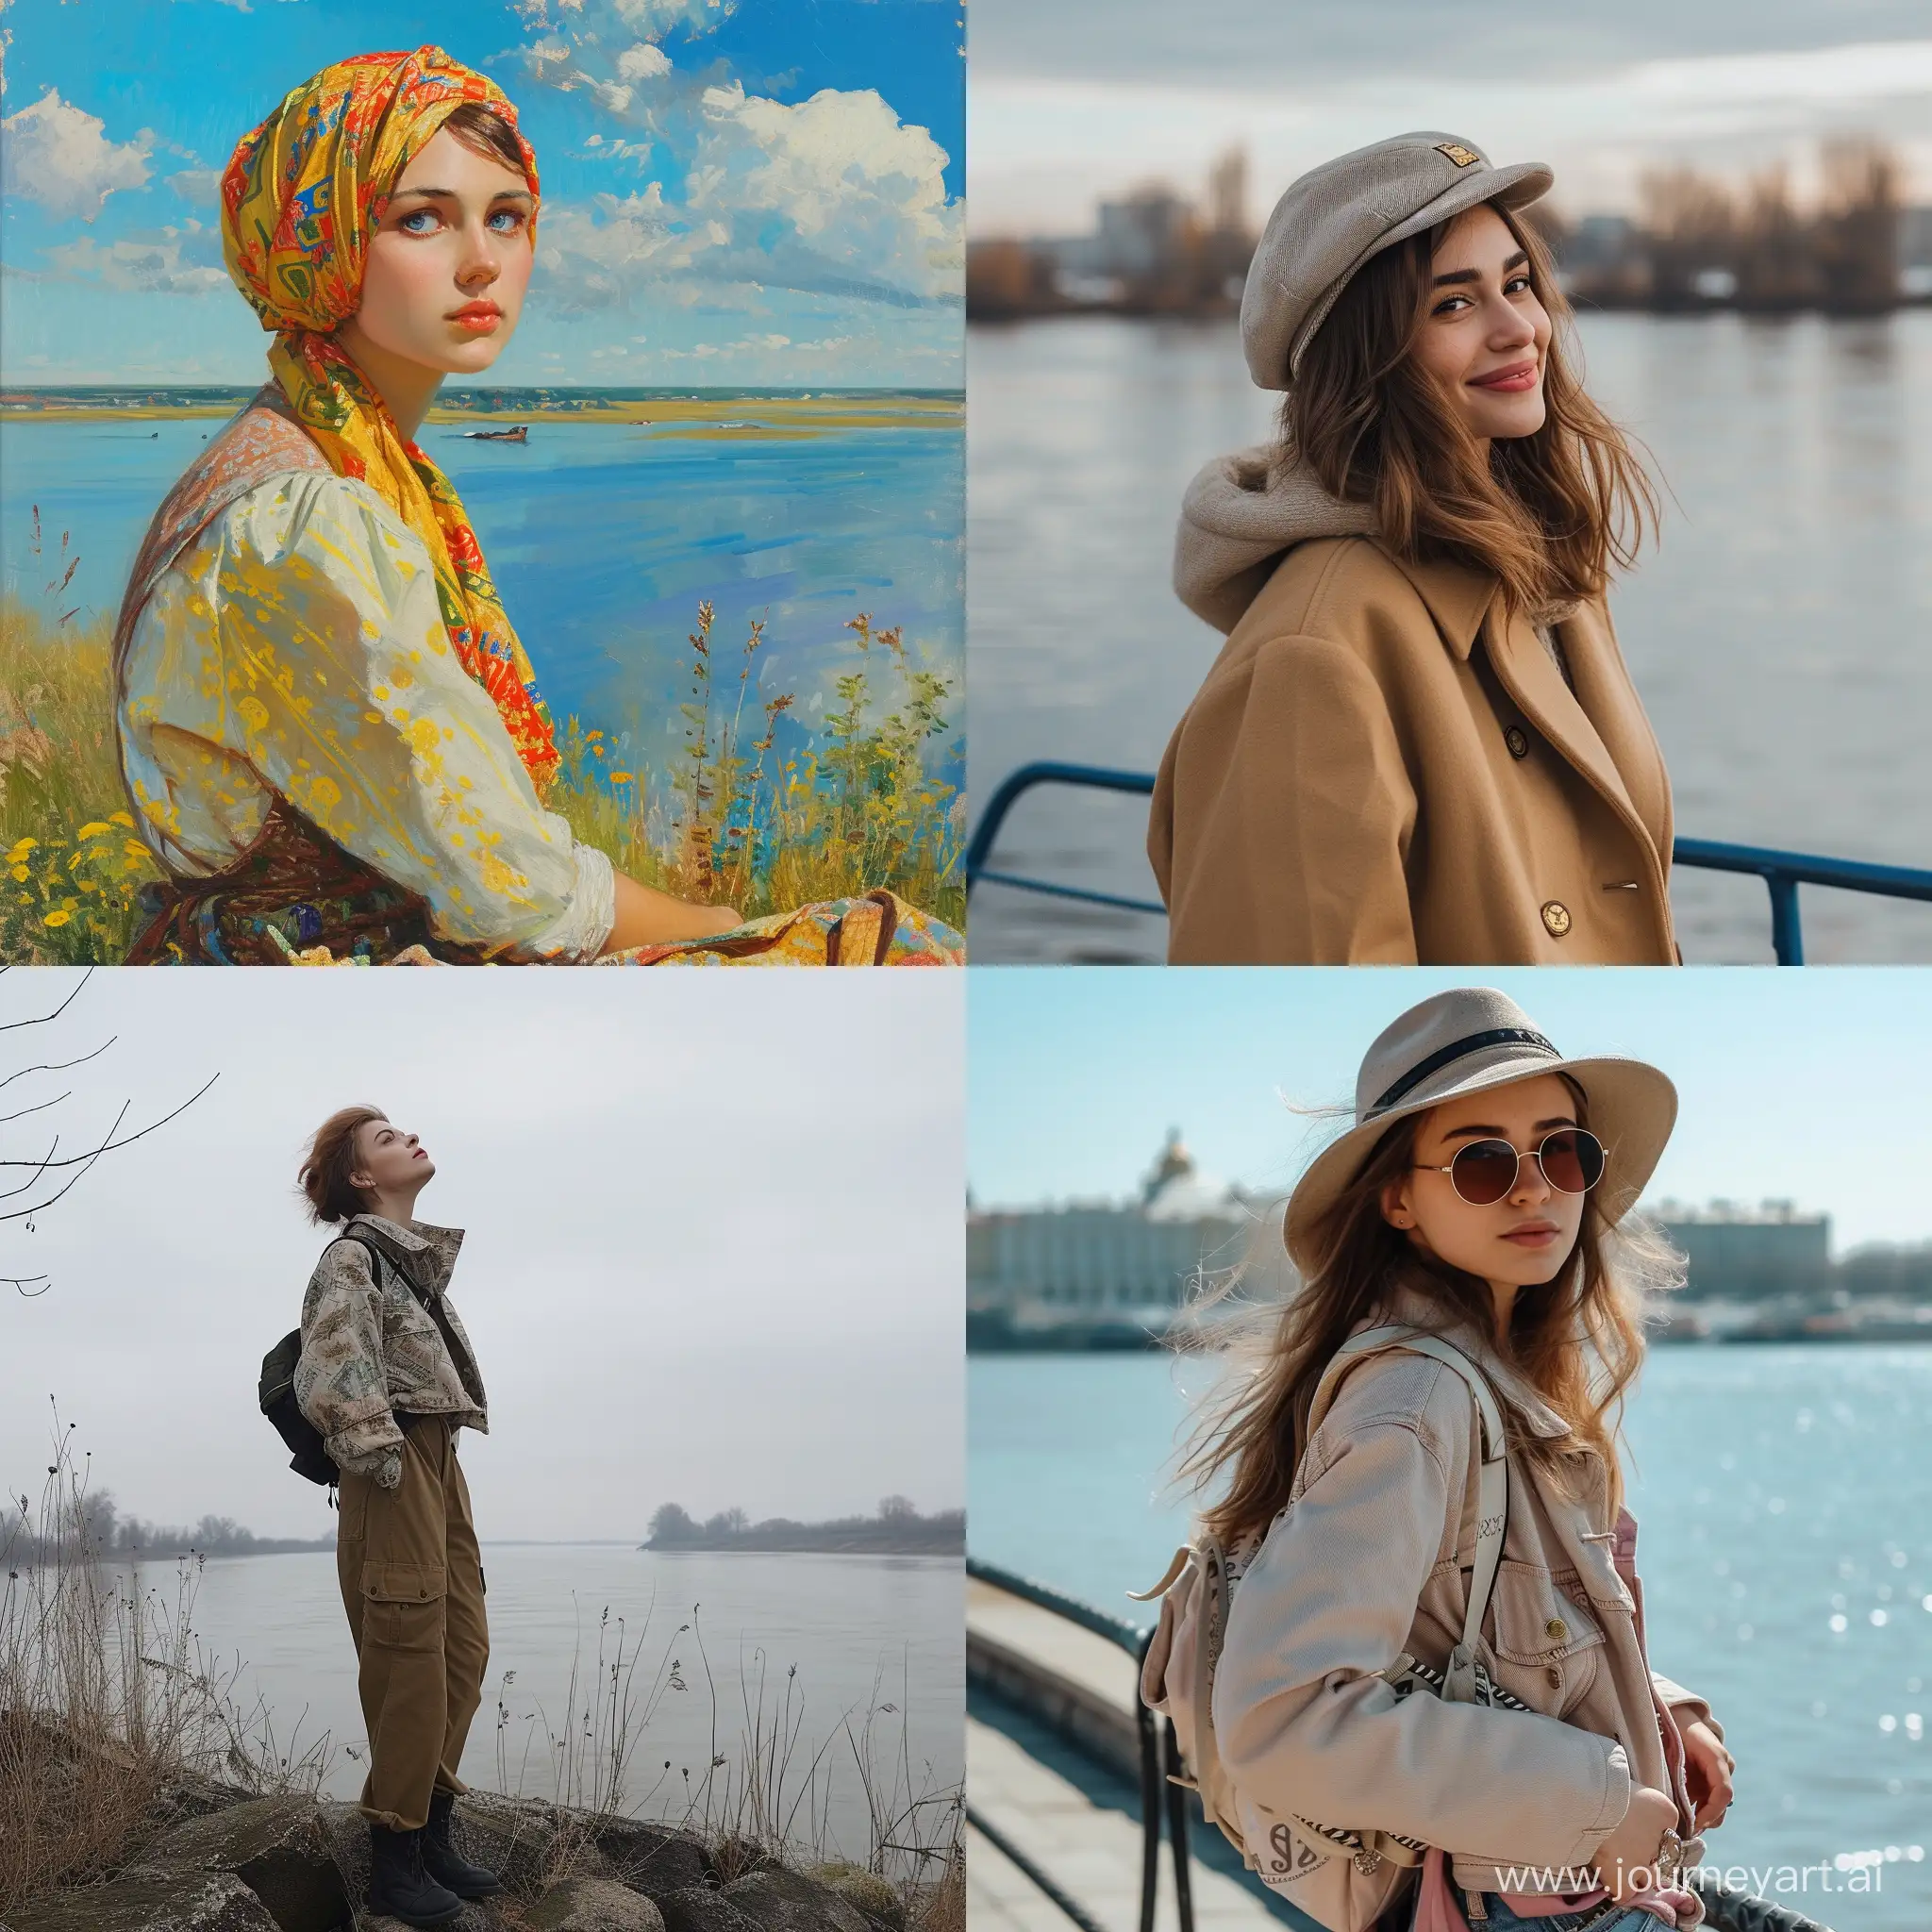 Fashionable-Girl-Posing-with-Volga-River-Backdrop